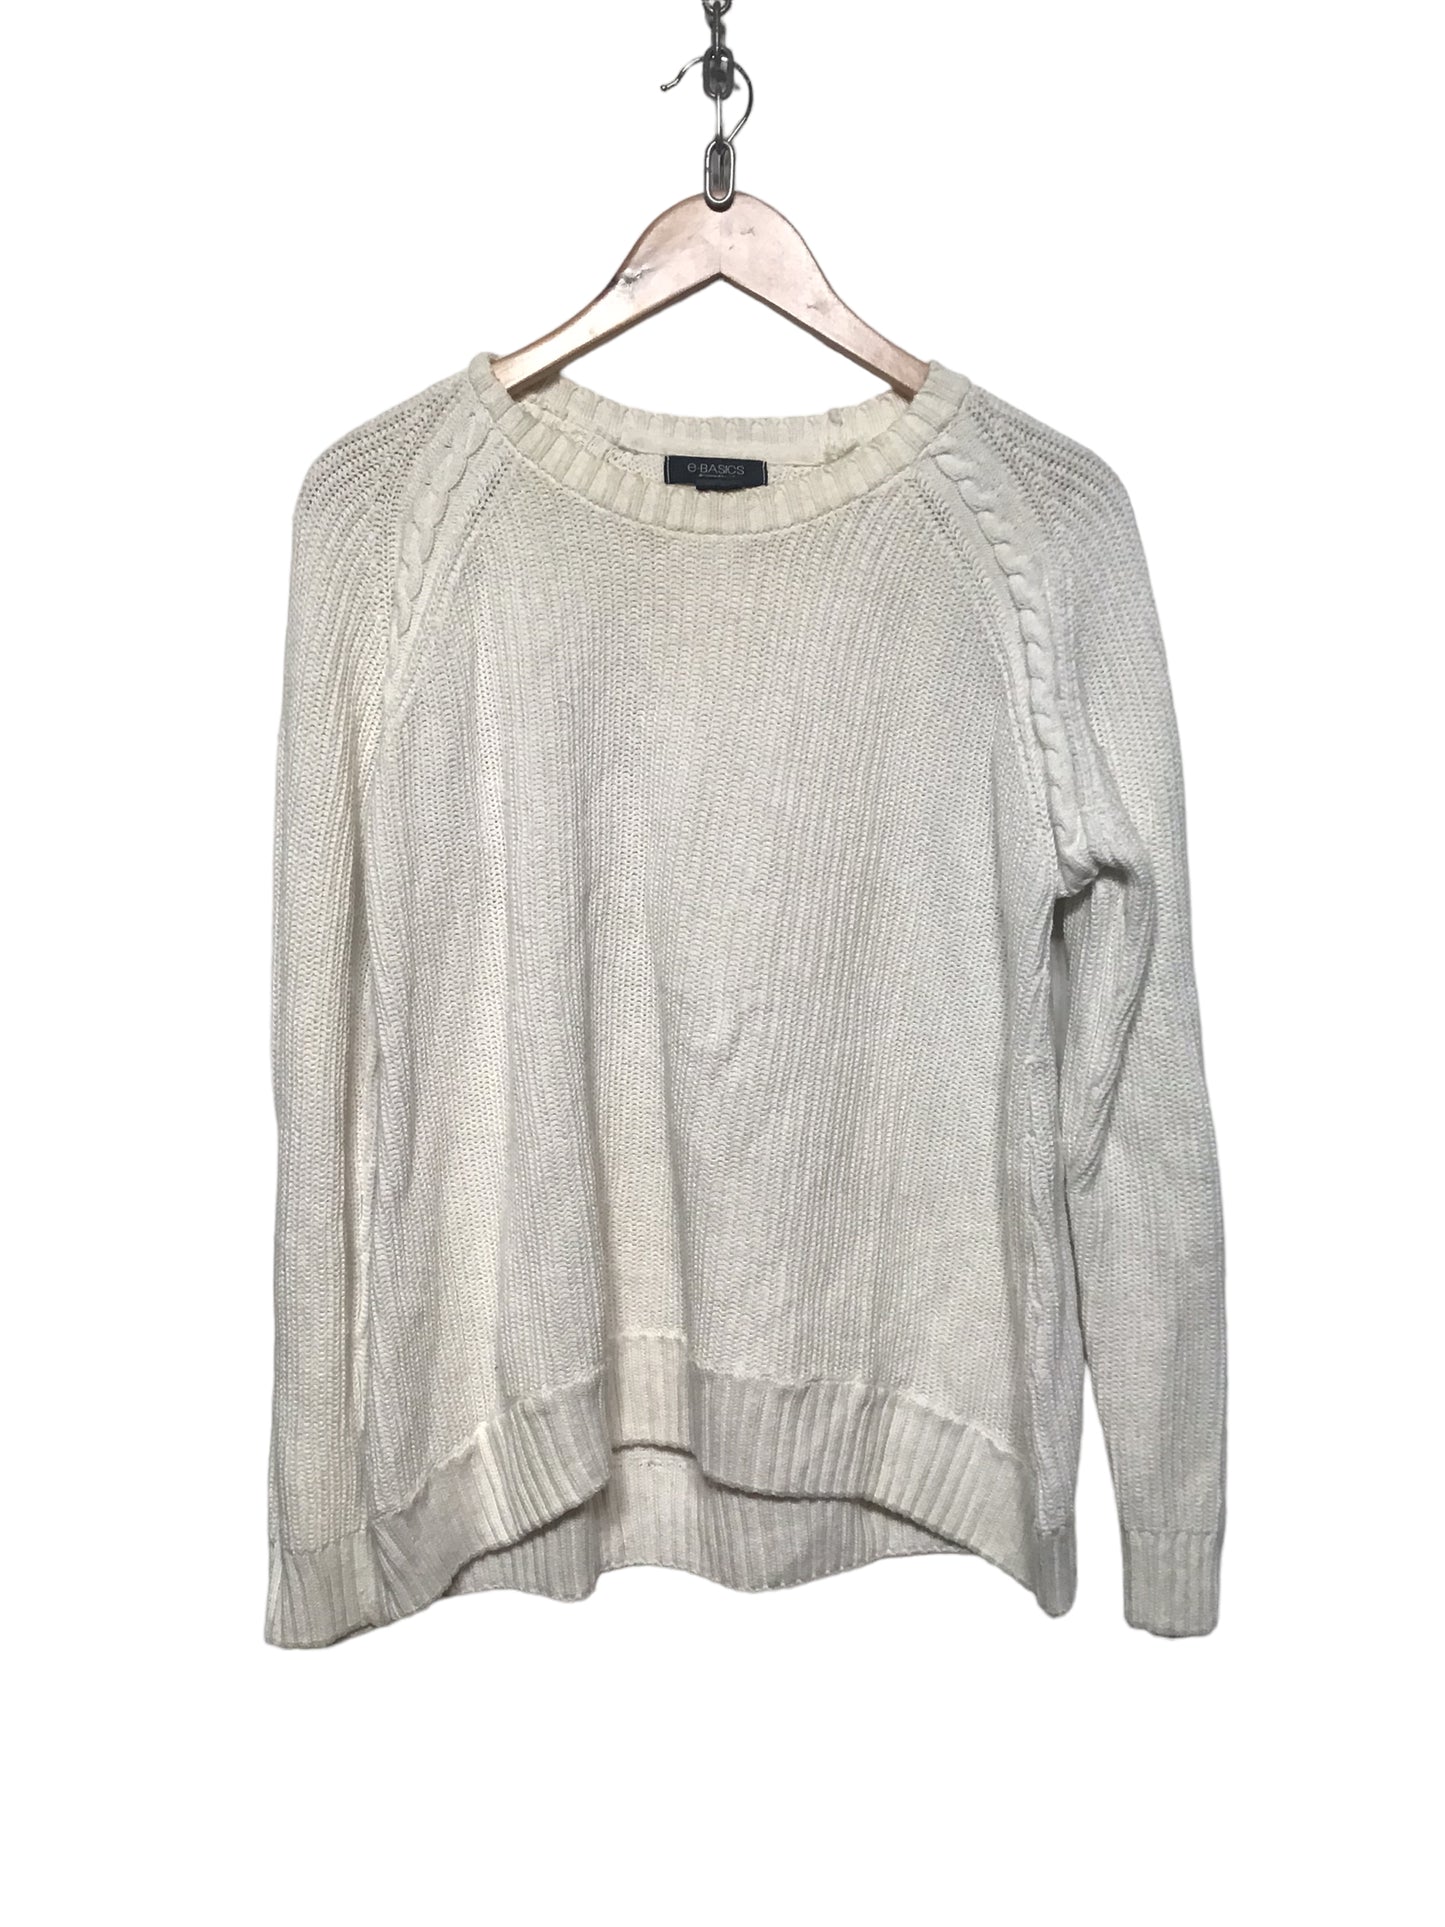 E-Basics Knitted Sweatshirt (Size M)